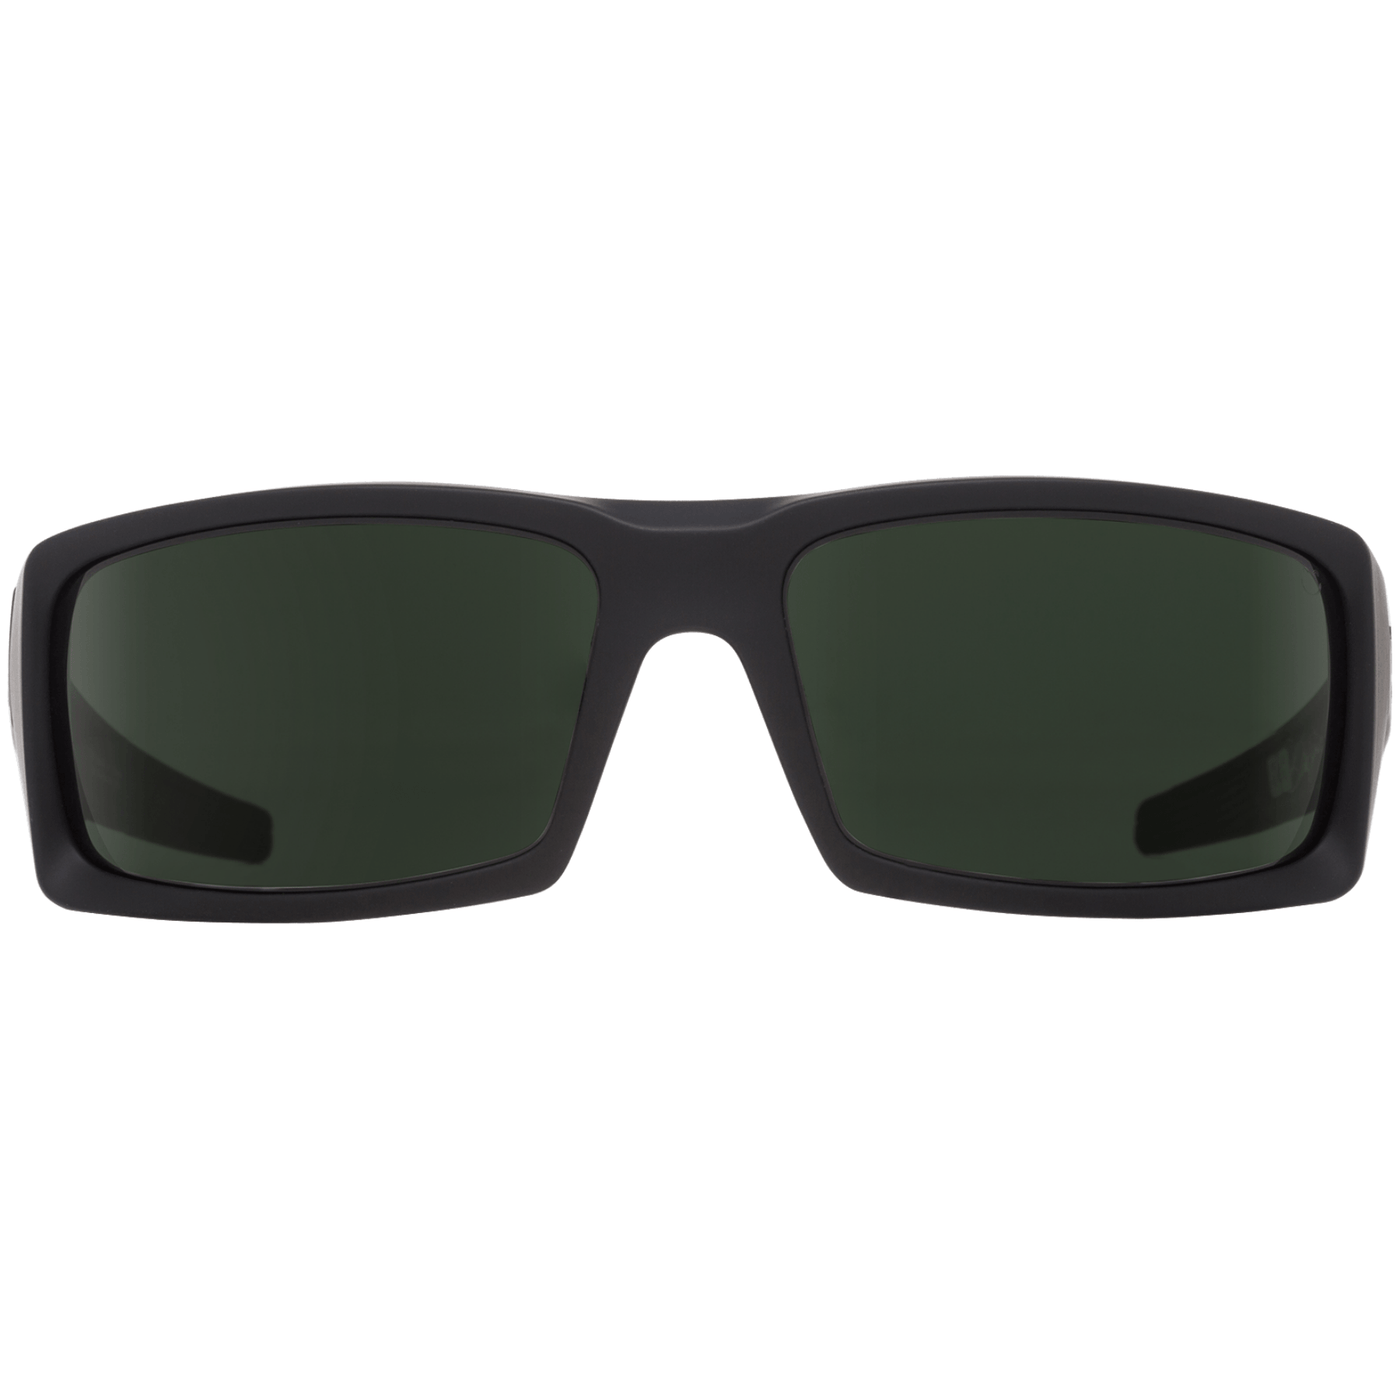 black wraparound shaped sunglasses for men